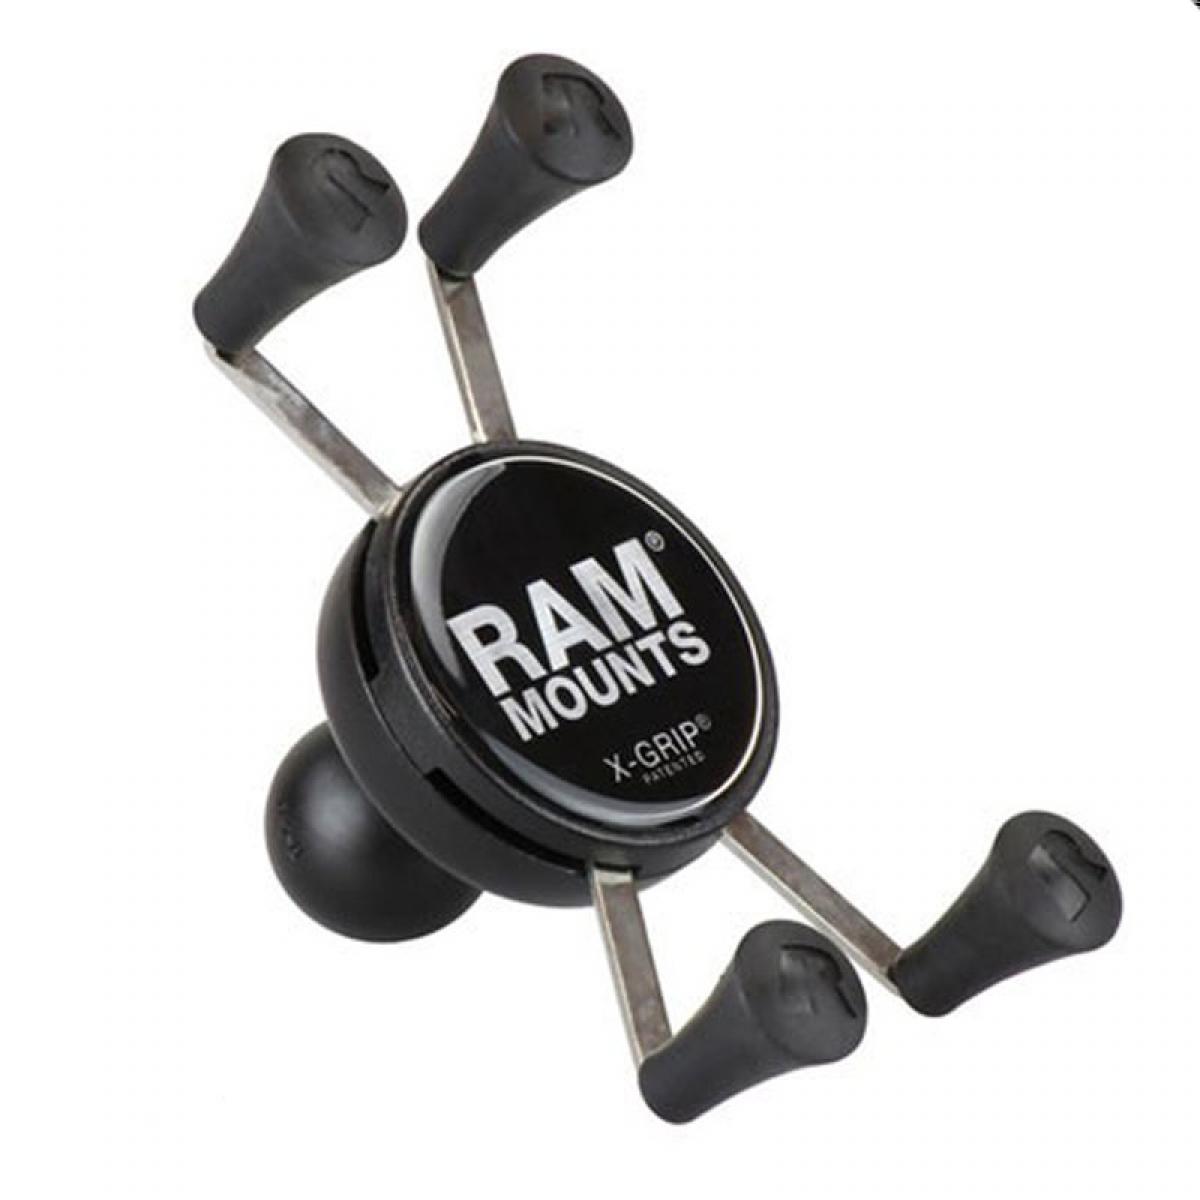 Genuine Motorcycle Ram Mount Universal X Grip Smart phone holder - Small | eBay